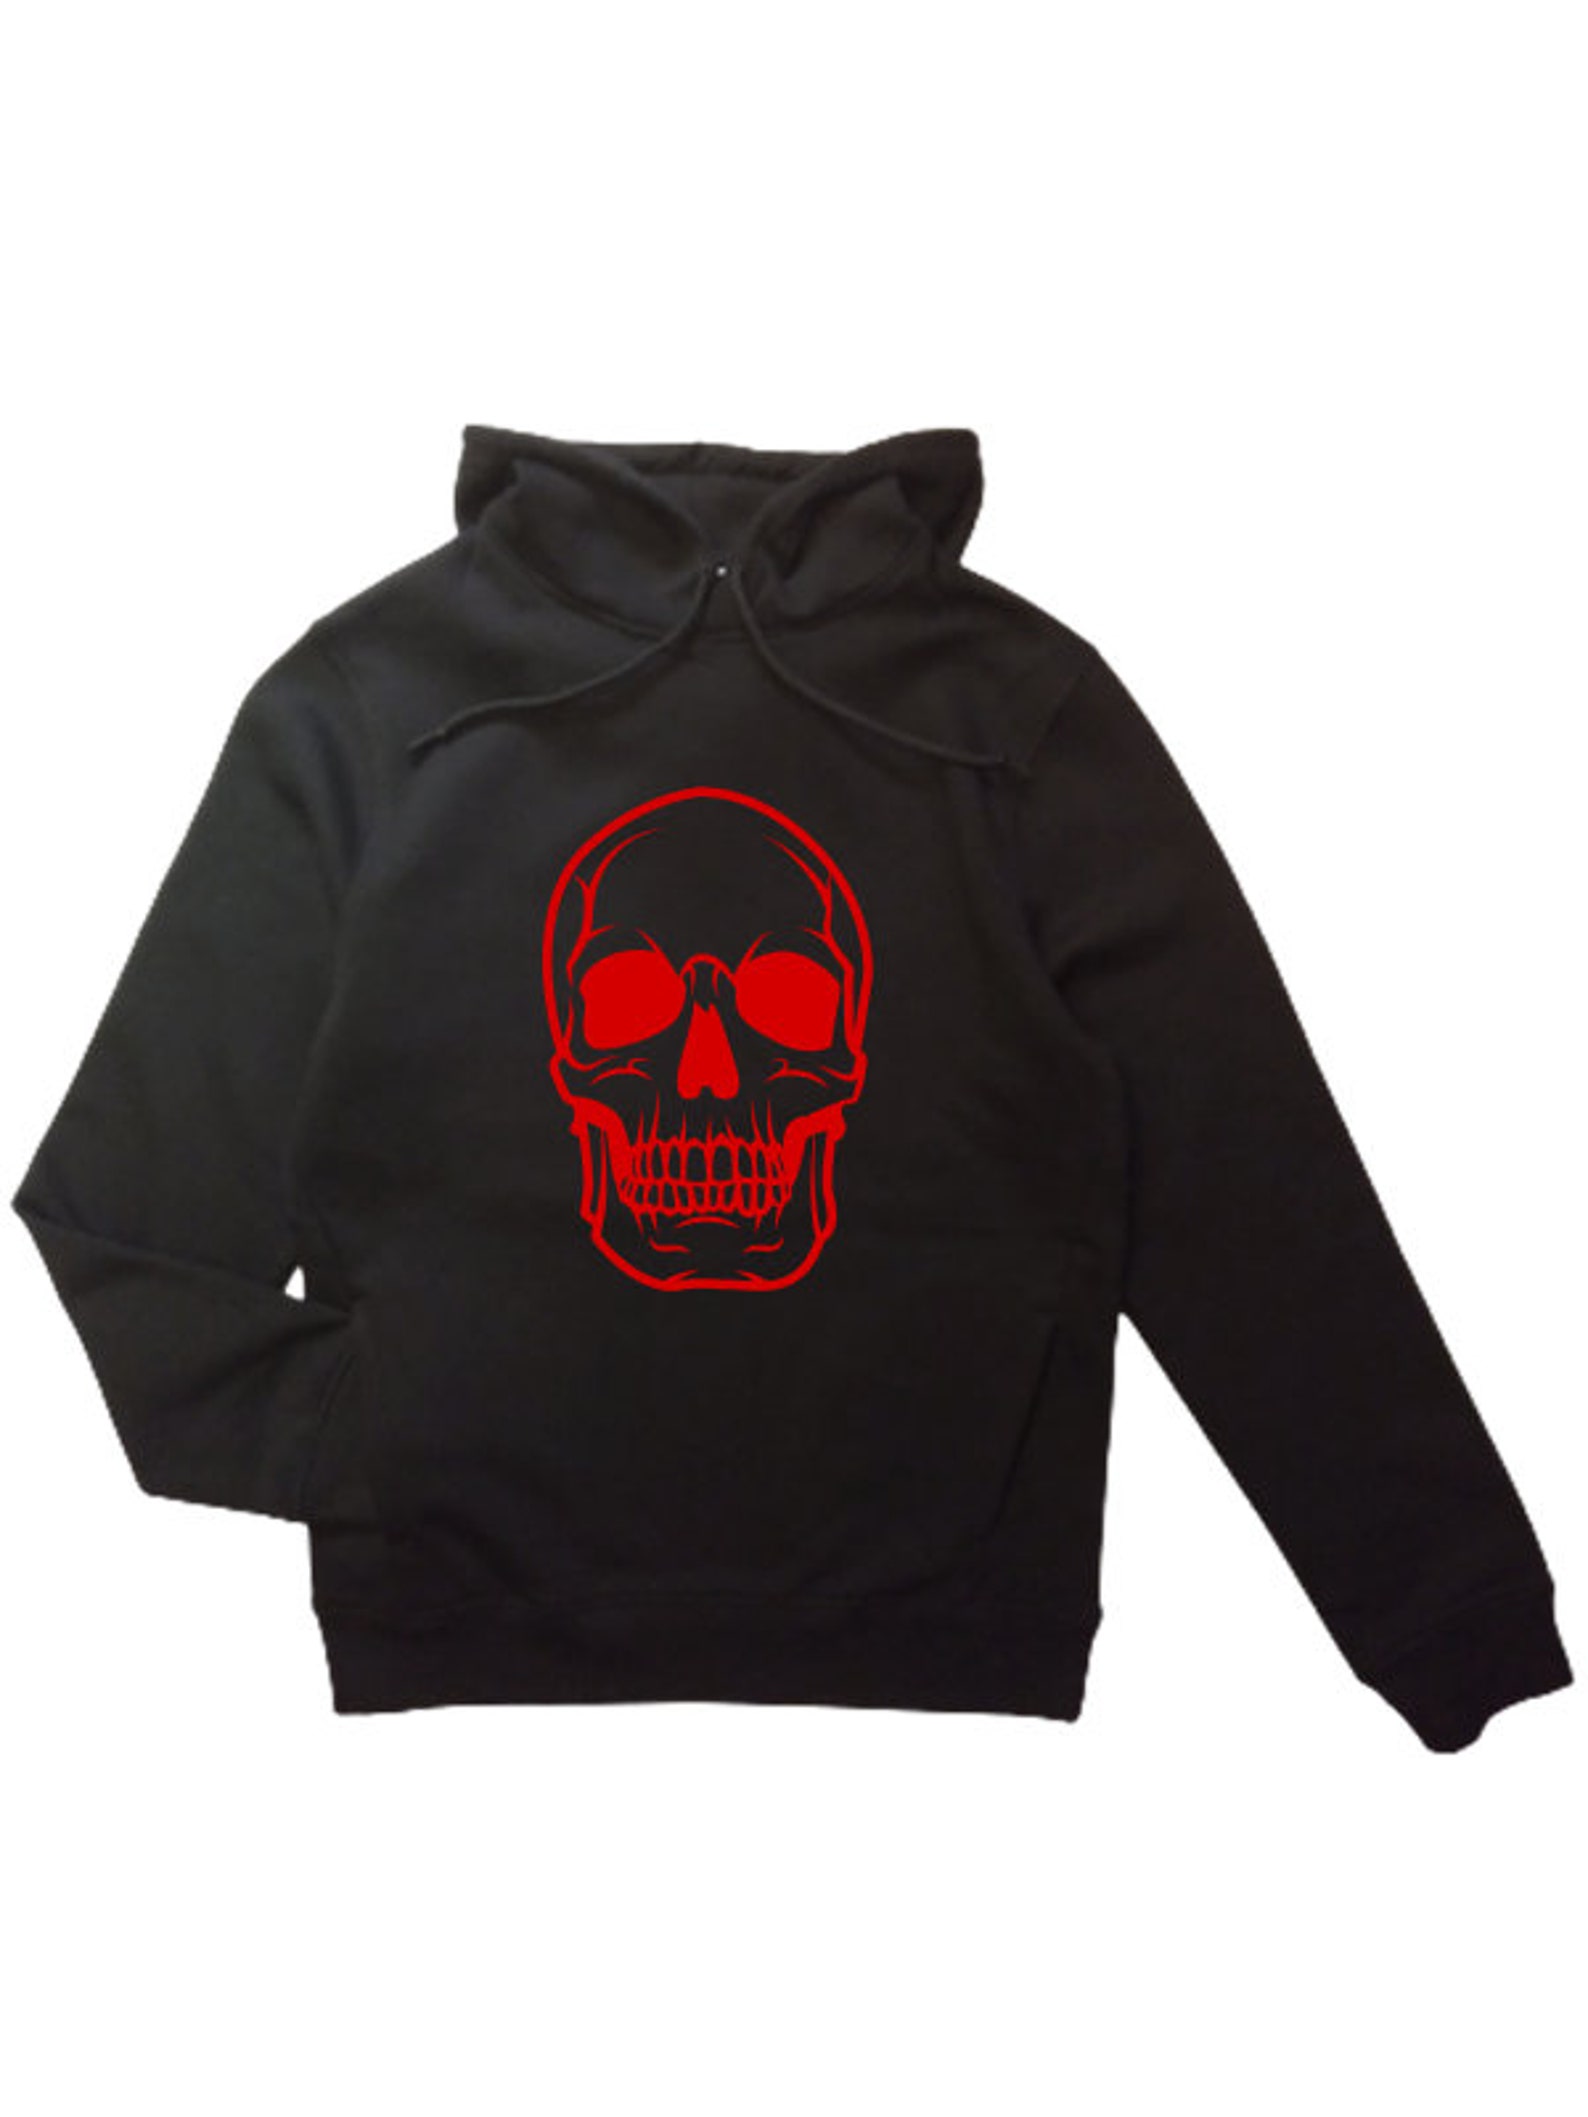 Black Hoodie With White Skull Red Skull Organic Cotton | Etsy